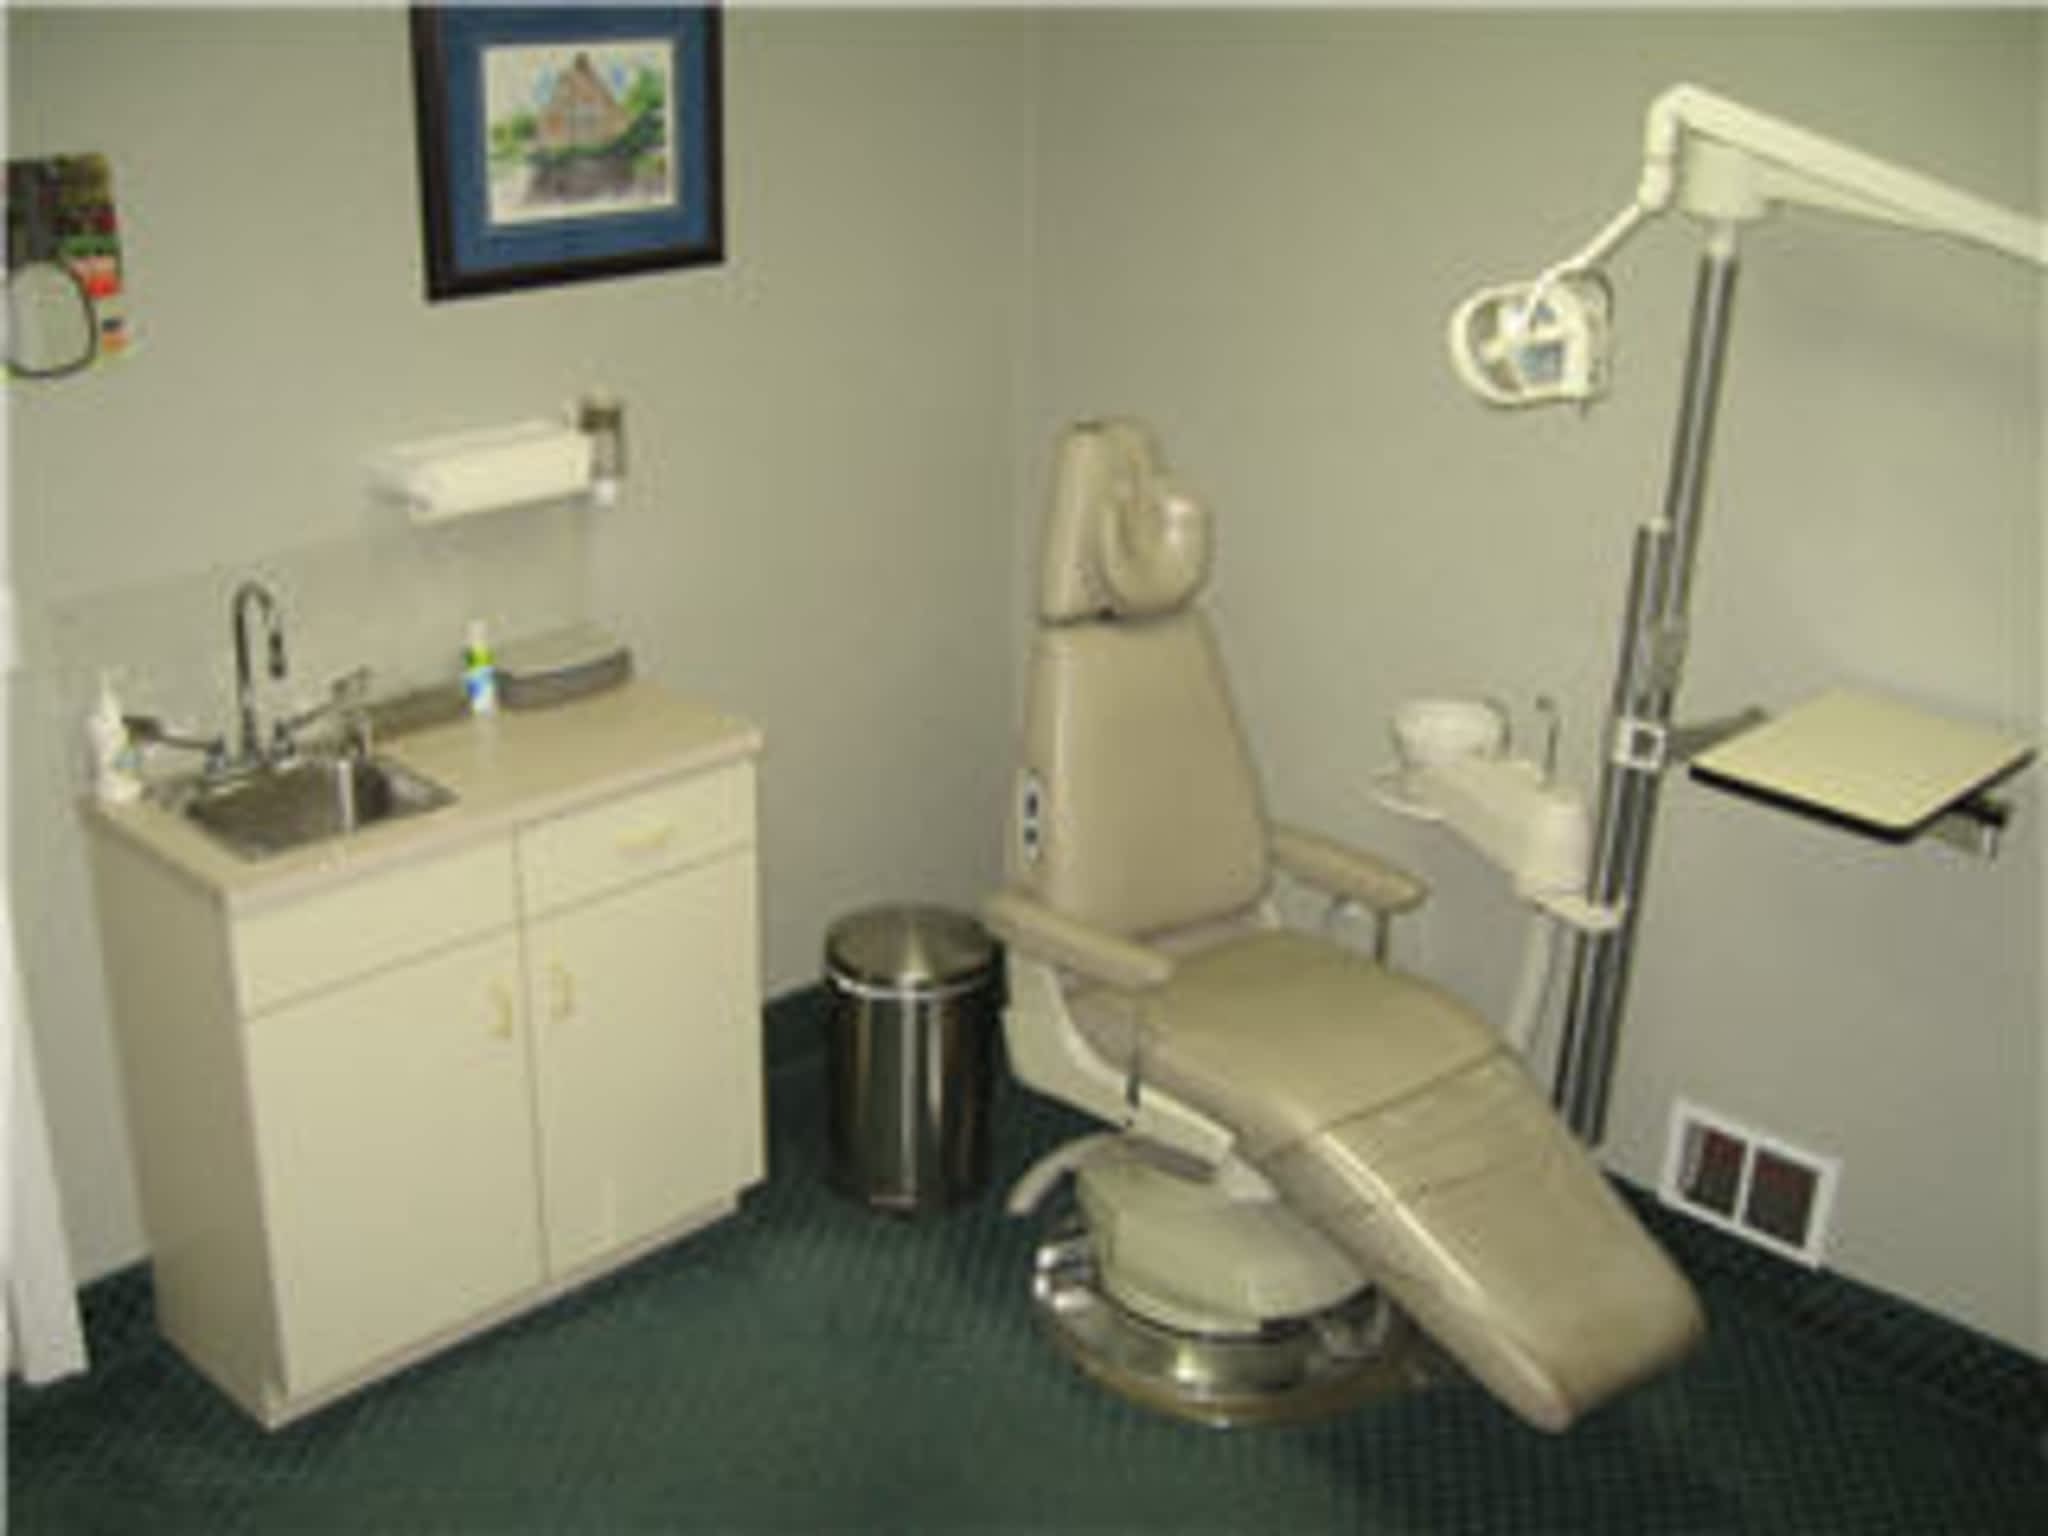 photo Zimmerman Denture Clinic